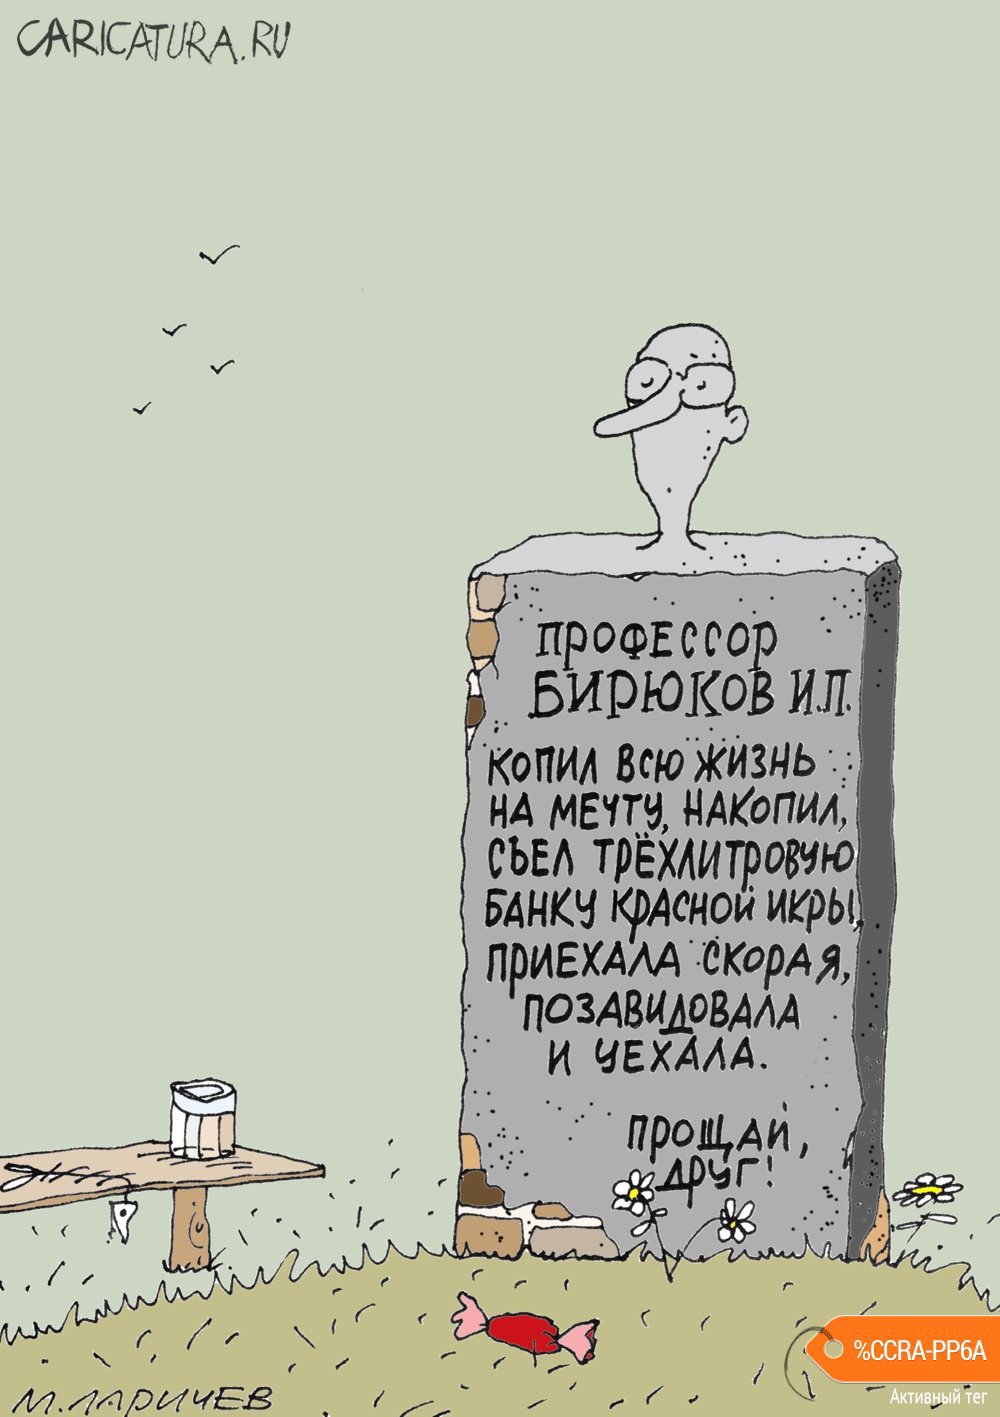 Карикатура "Много букв в конце жизни", Михаил Ларичев